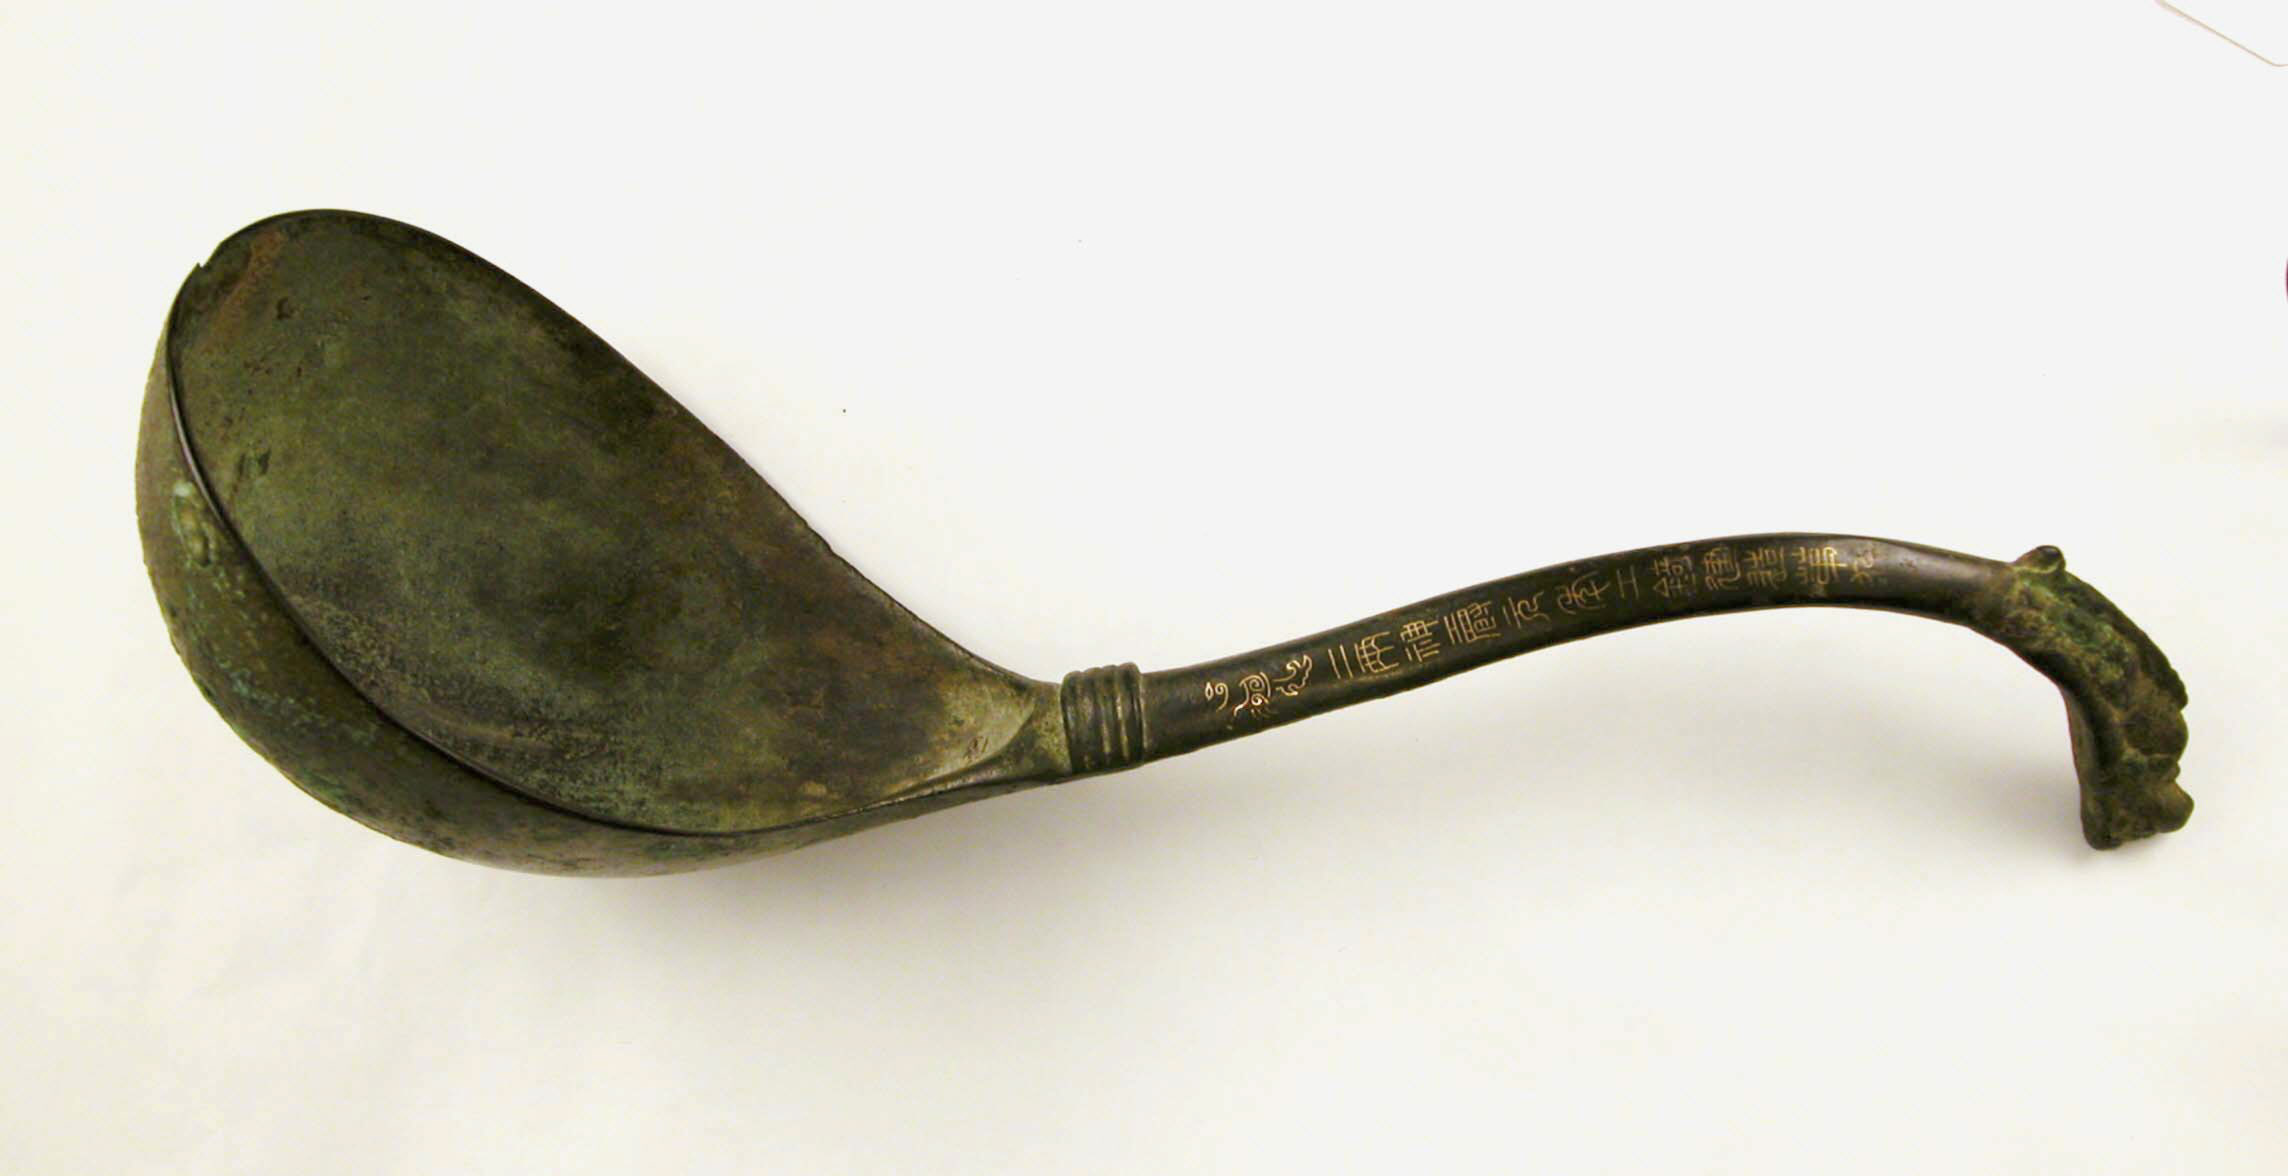 metal ladle with long handle